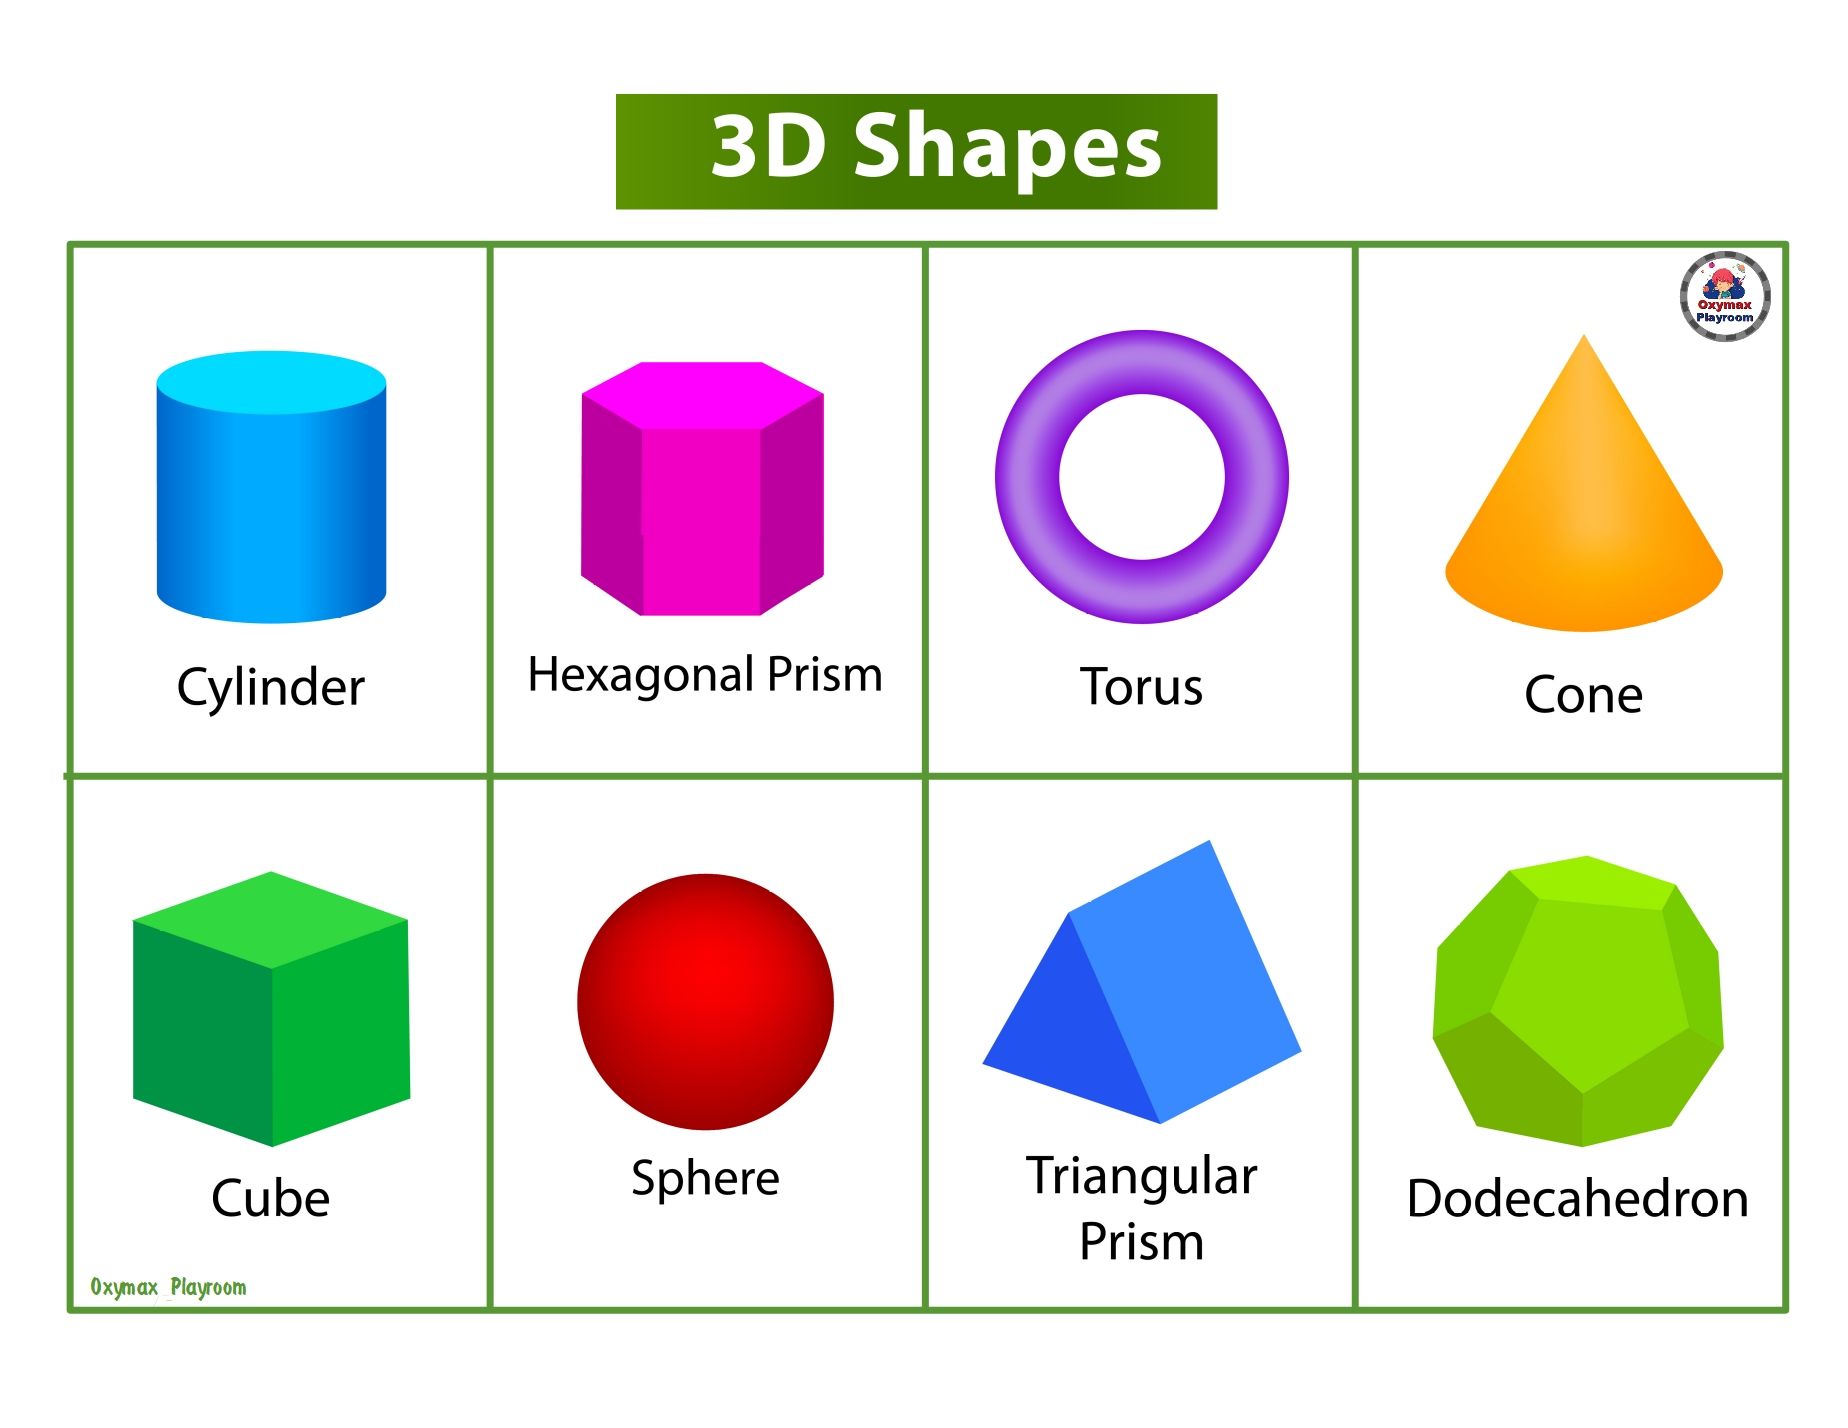 3d Shapes Printables Free